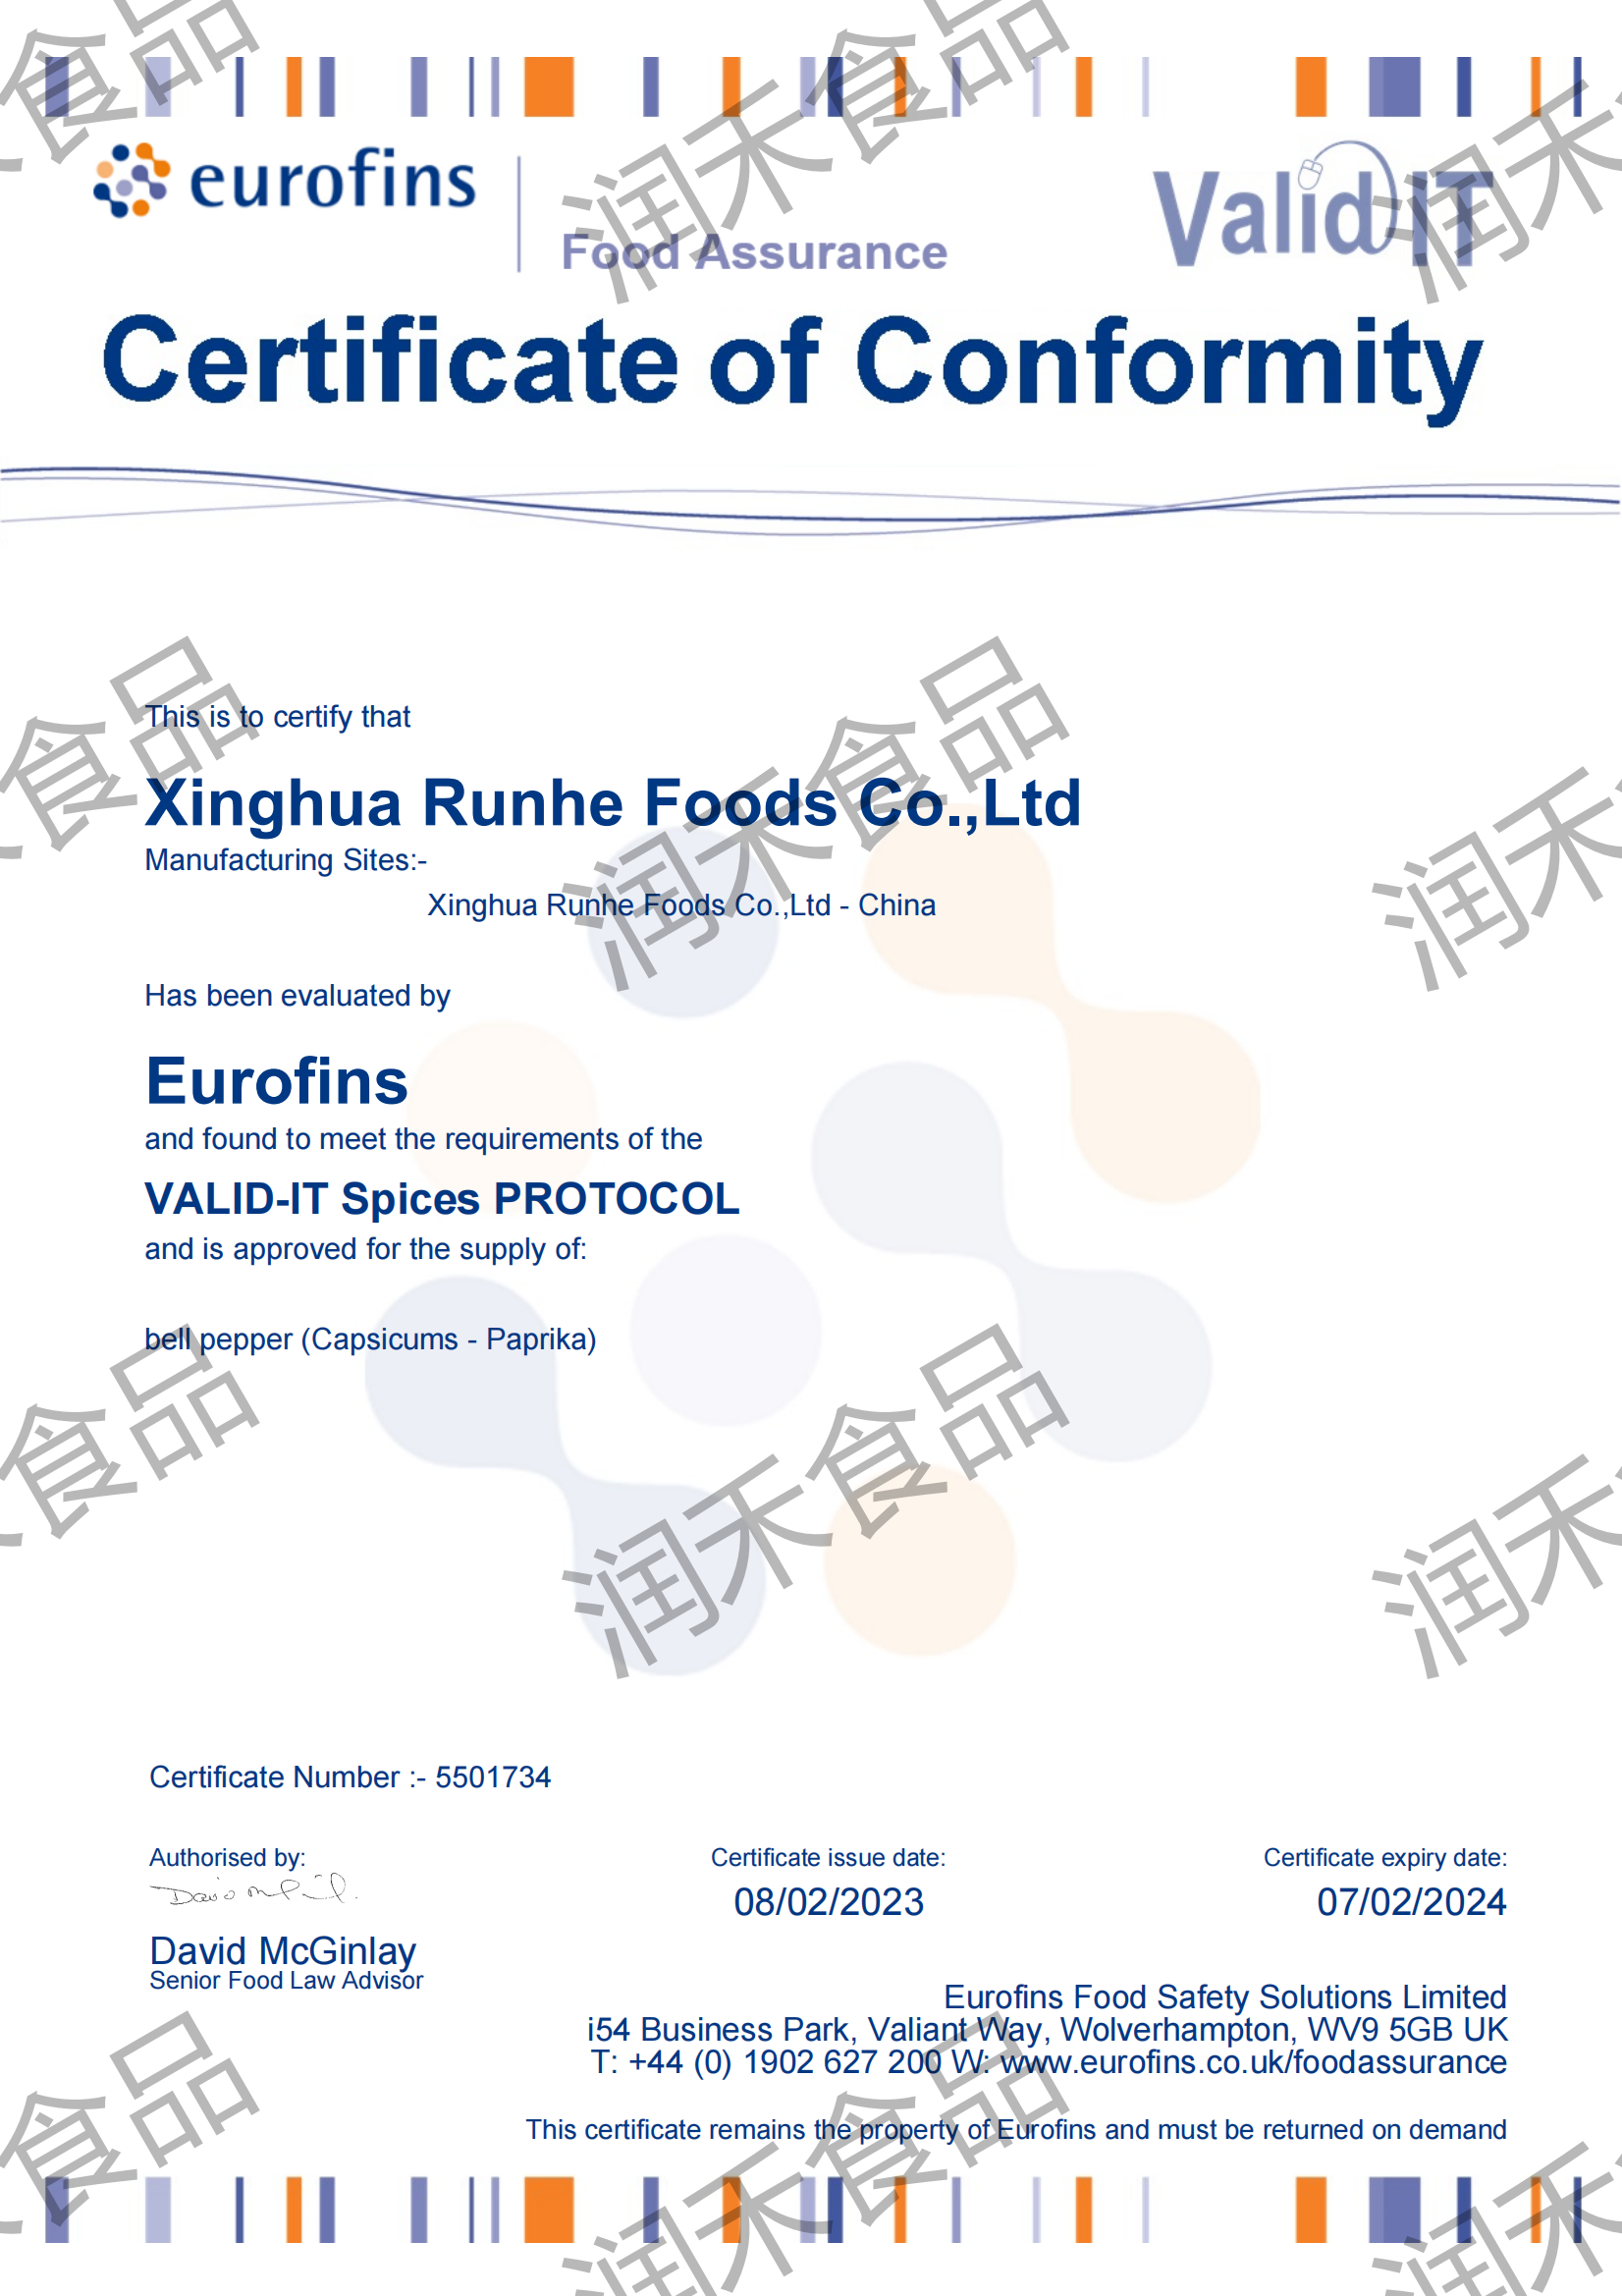 Xinghua Runhe Foods Co.,Ltd - 550